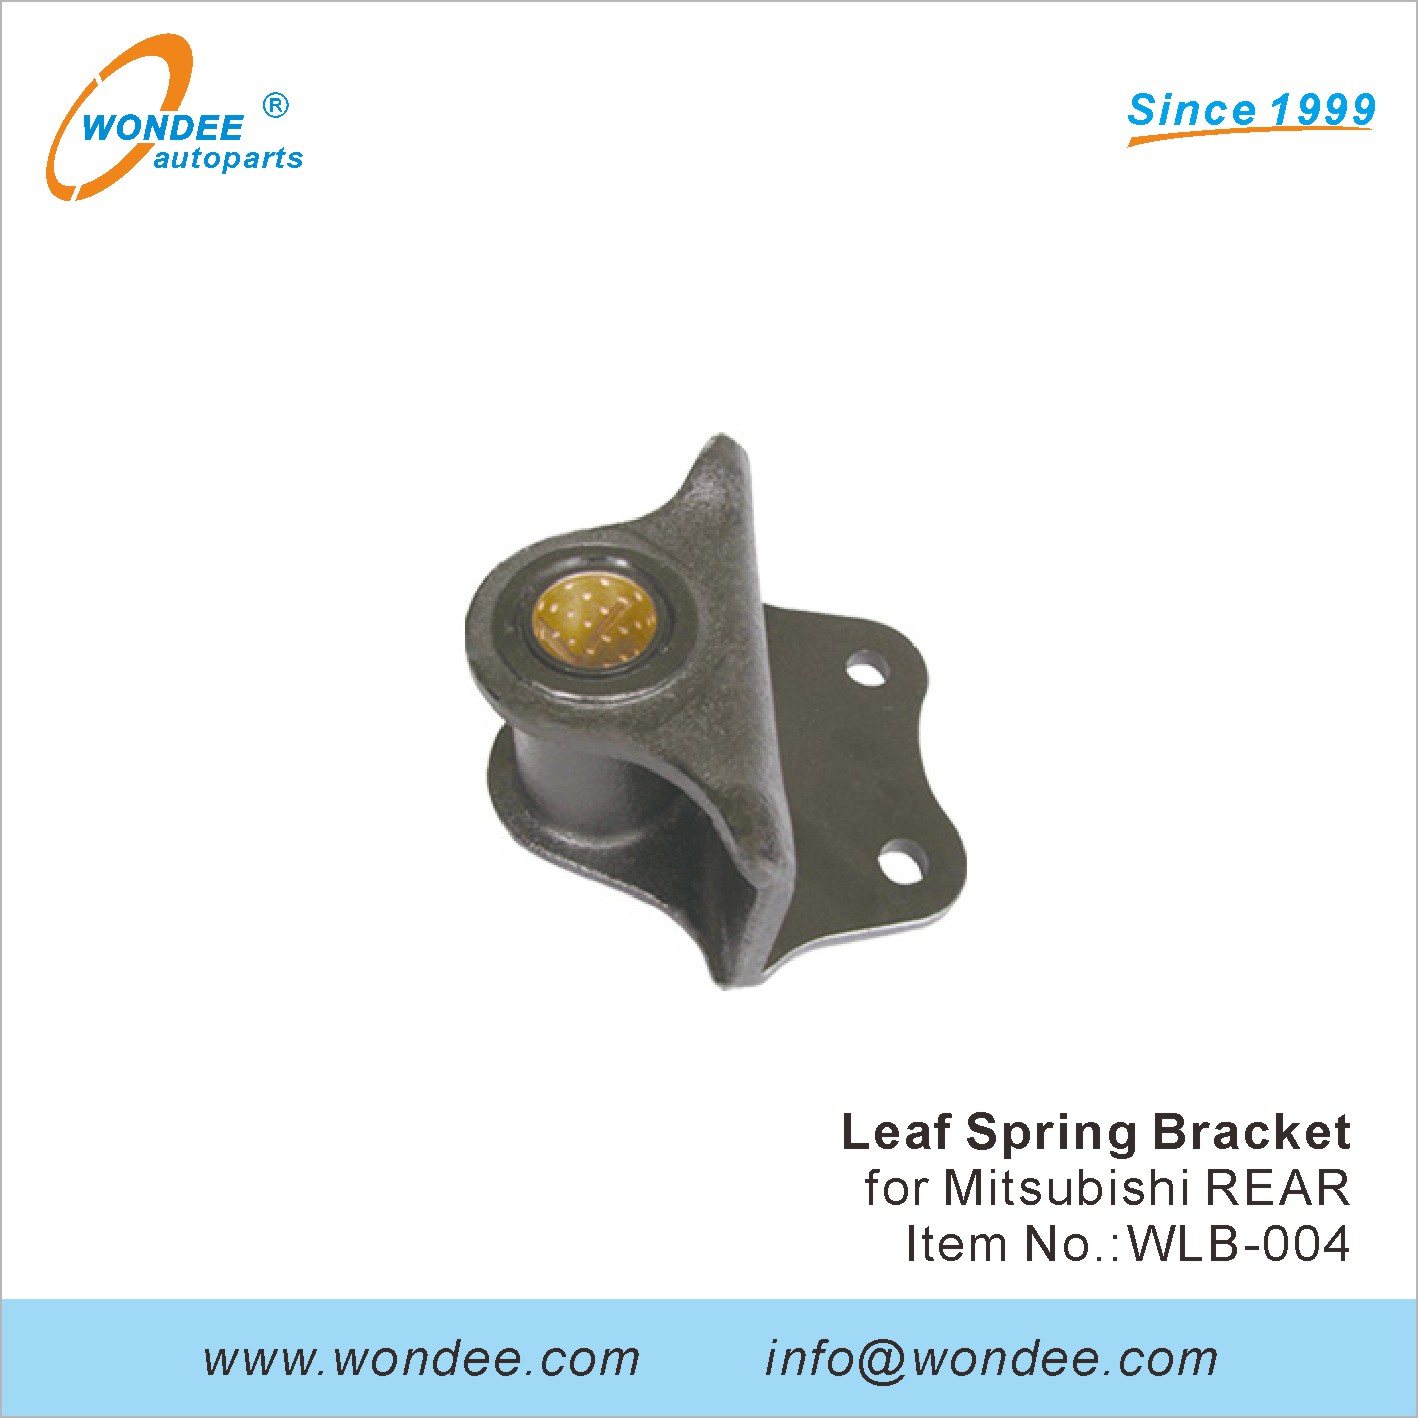 WONDEE leaf spring bracket (4)